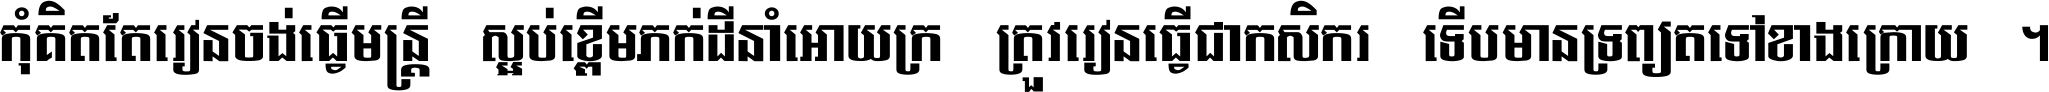 Pnomthom